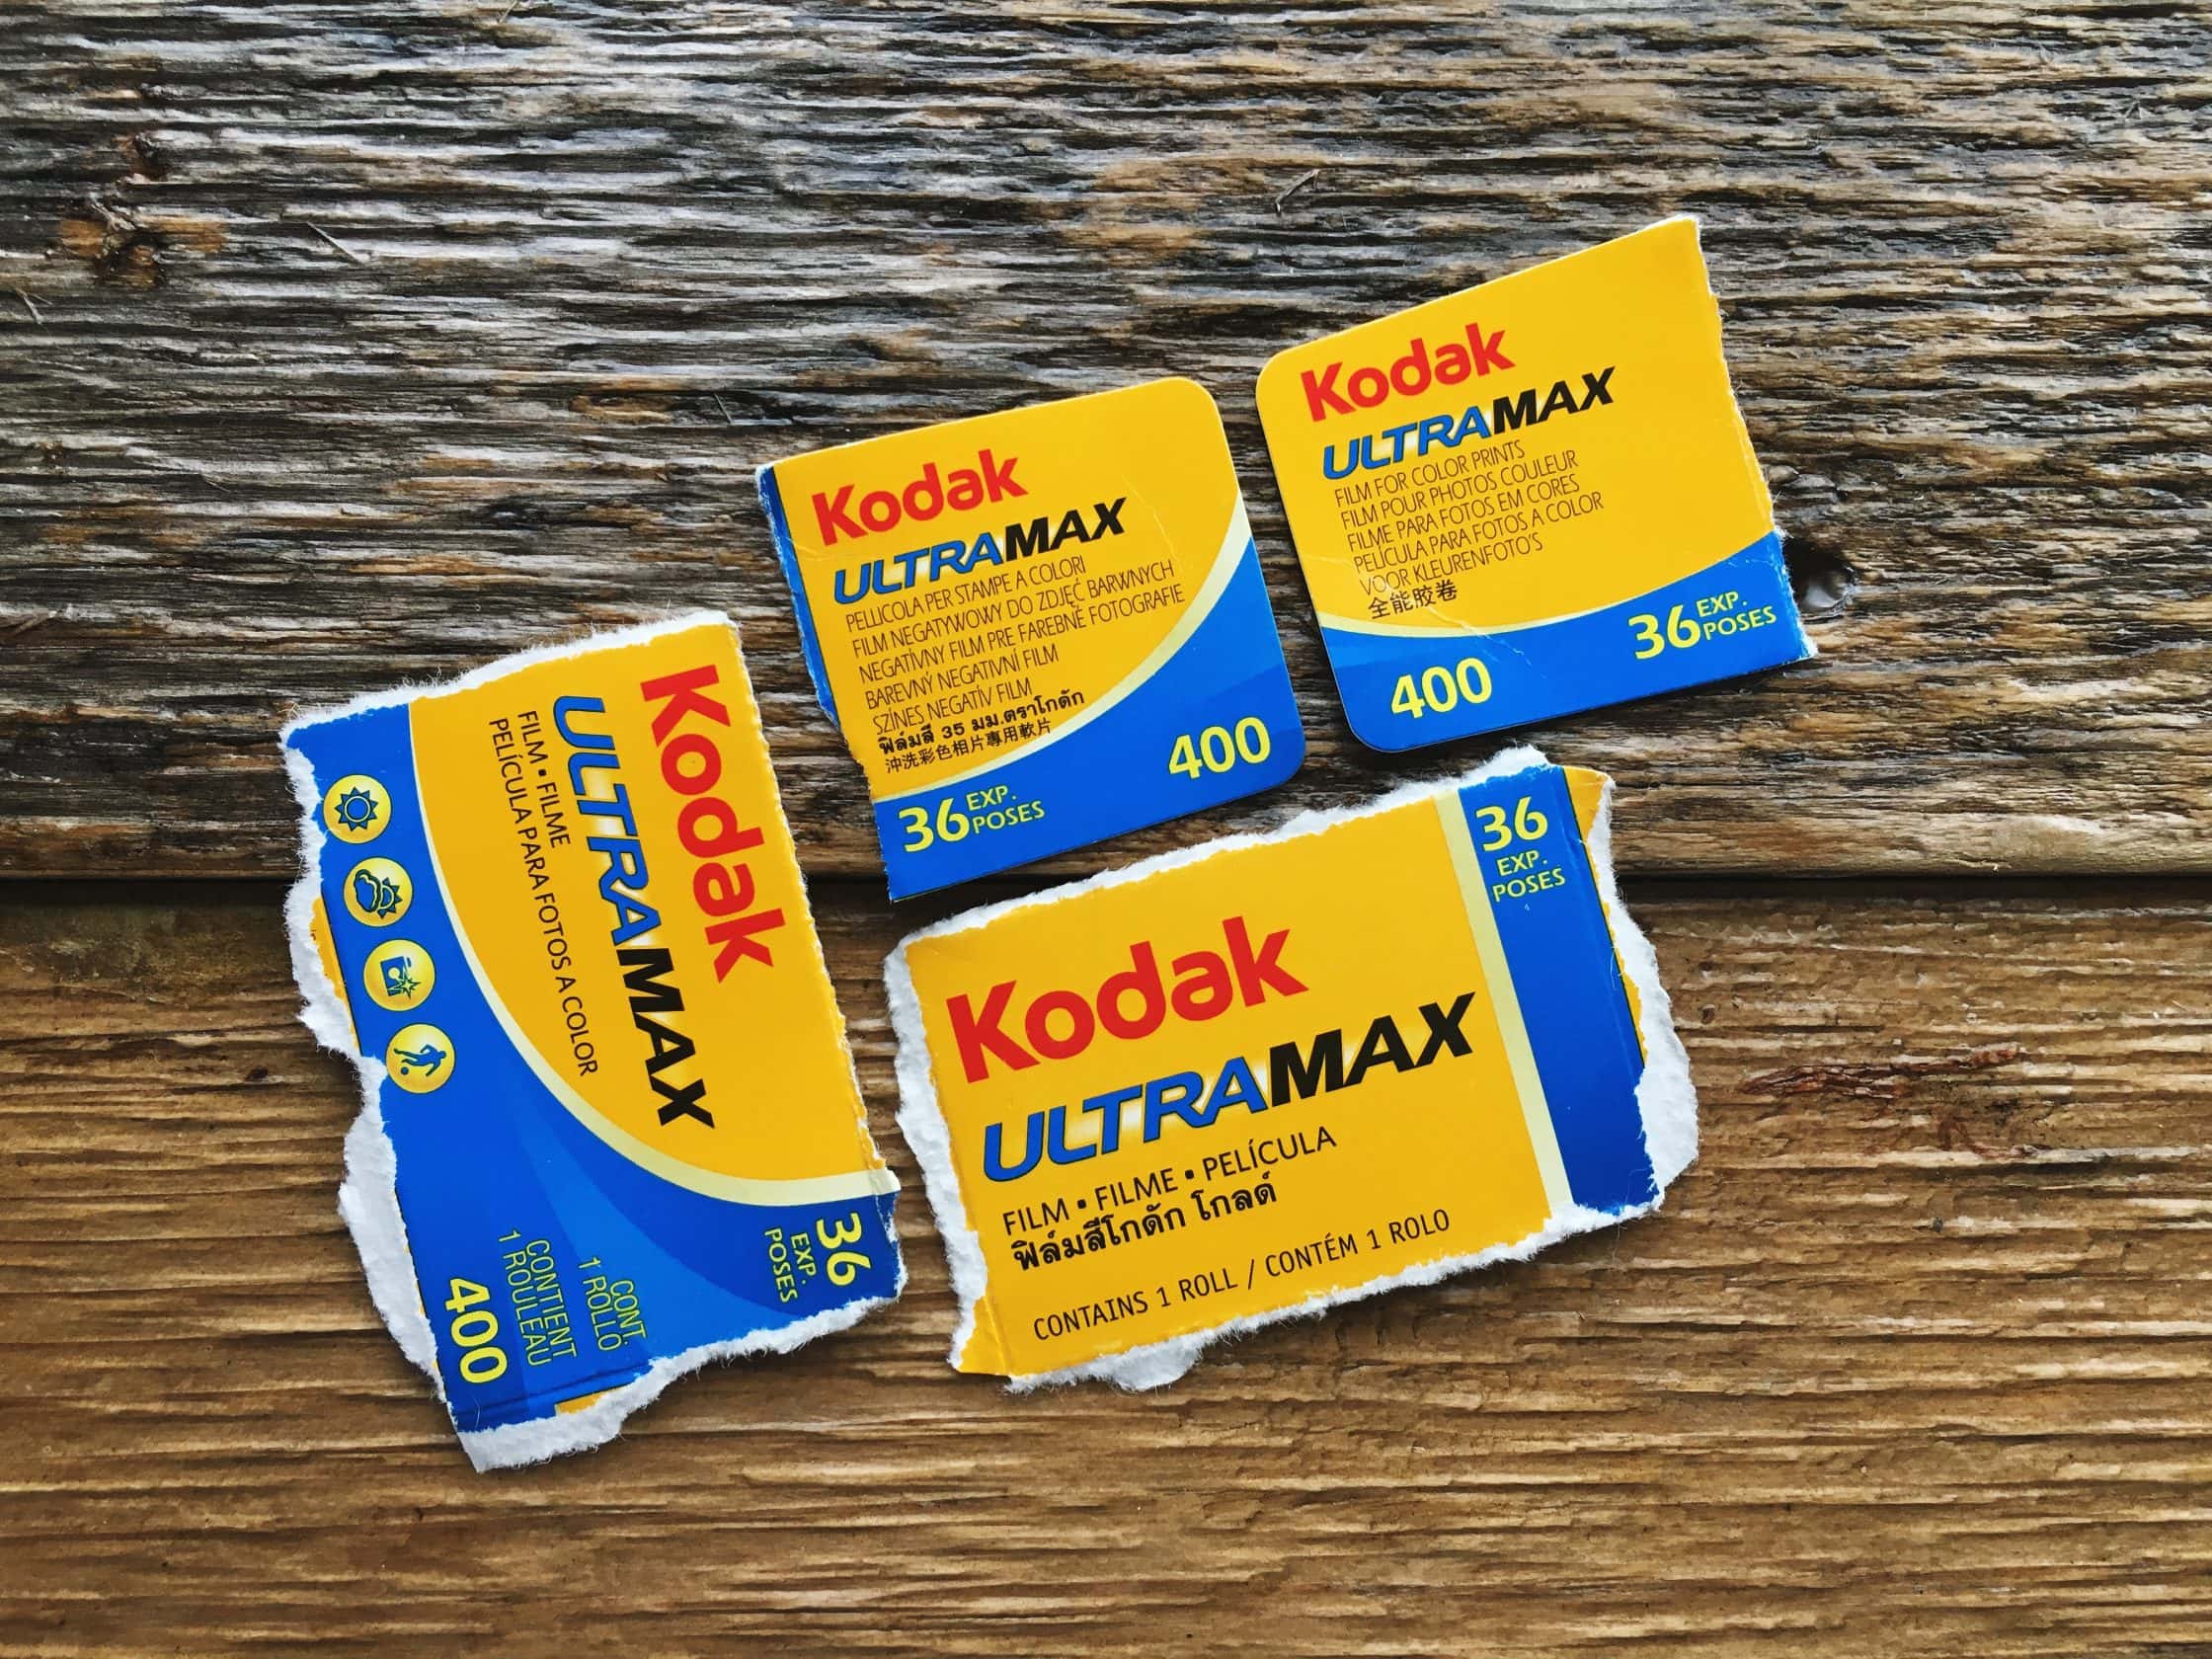 Kodak UltraMax 400 box